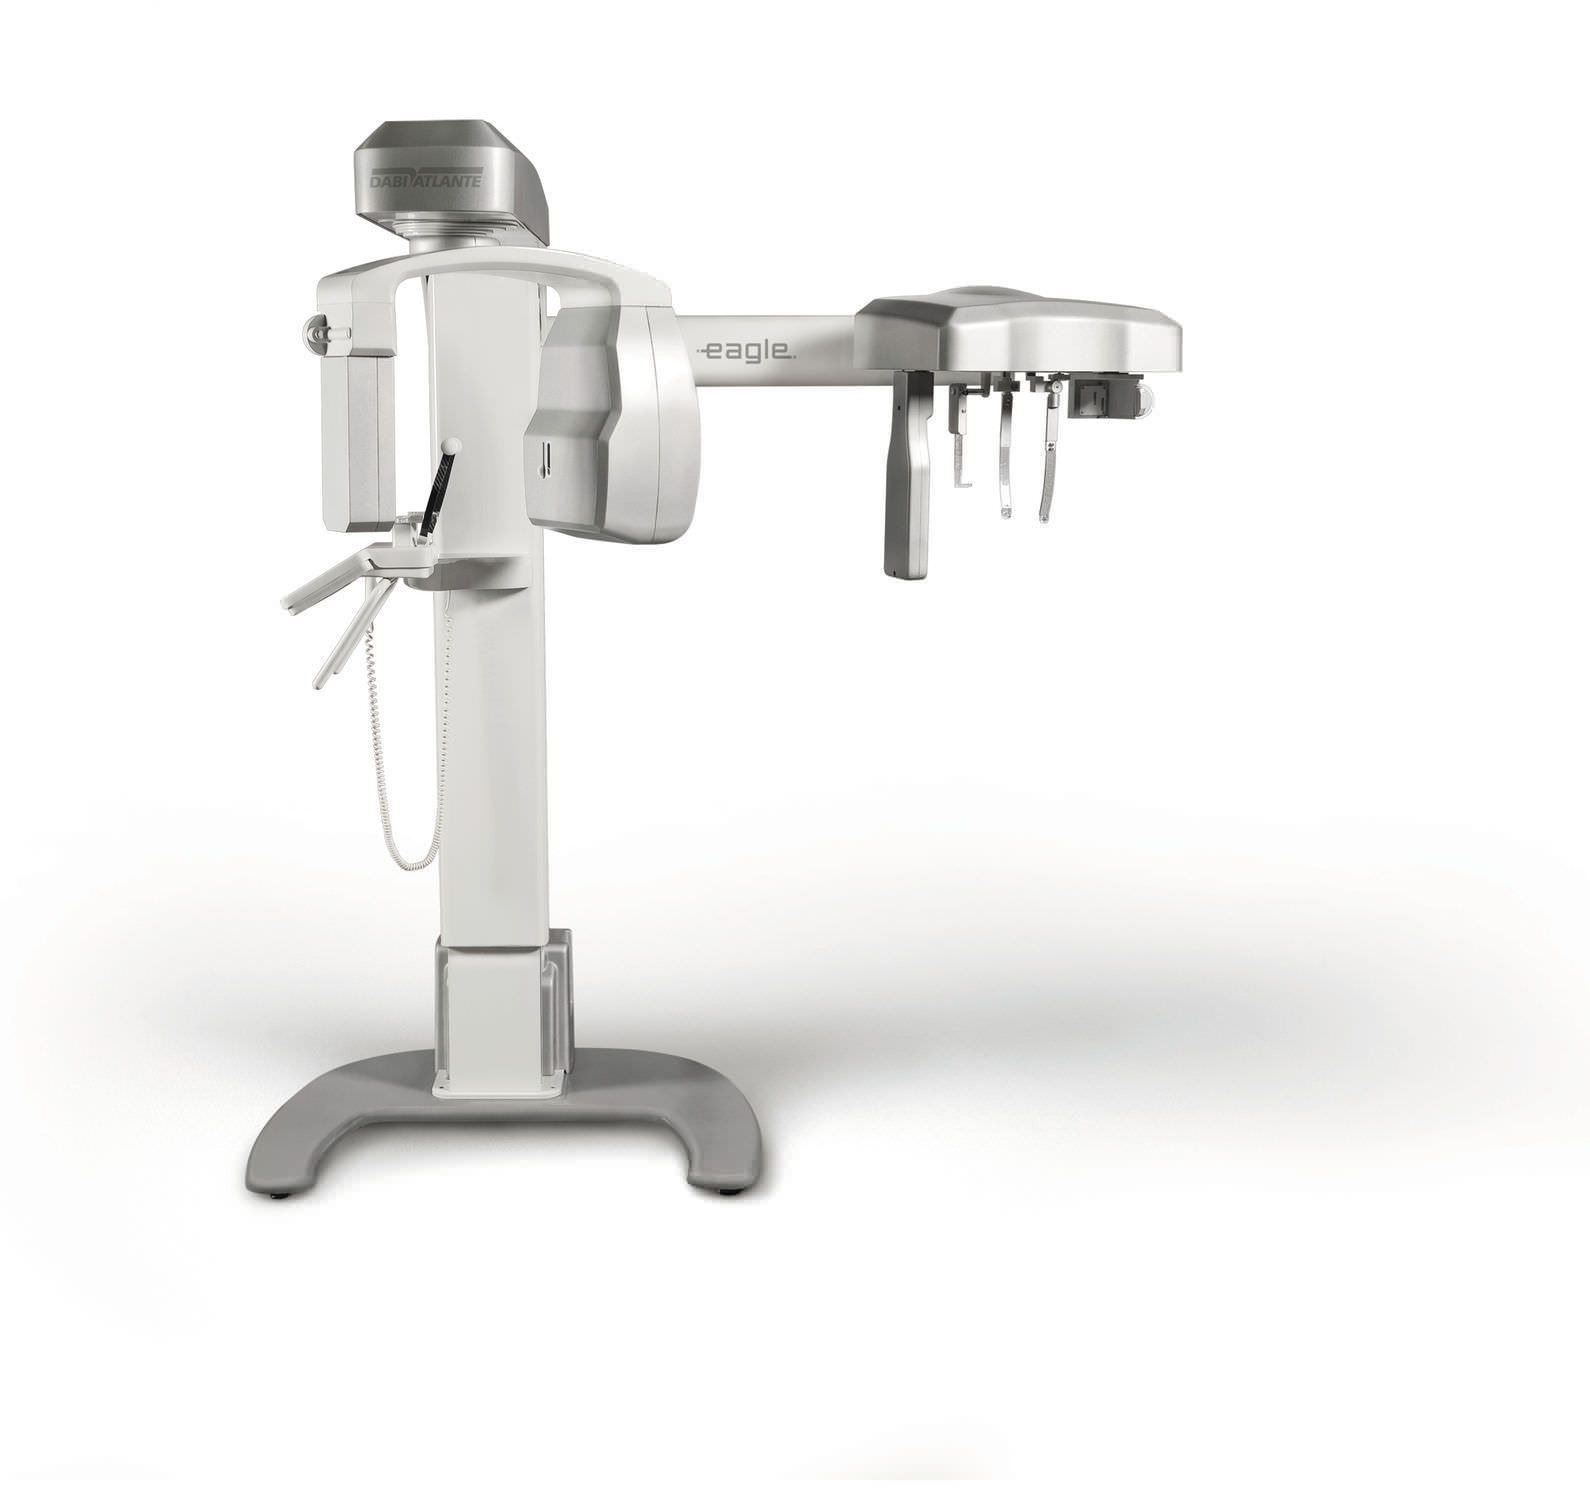 Panoramic X-ray system (dental radiology) / dental CBCT scanner / cephalometric X-ray system / digital EAGLE DABI ATLANTE